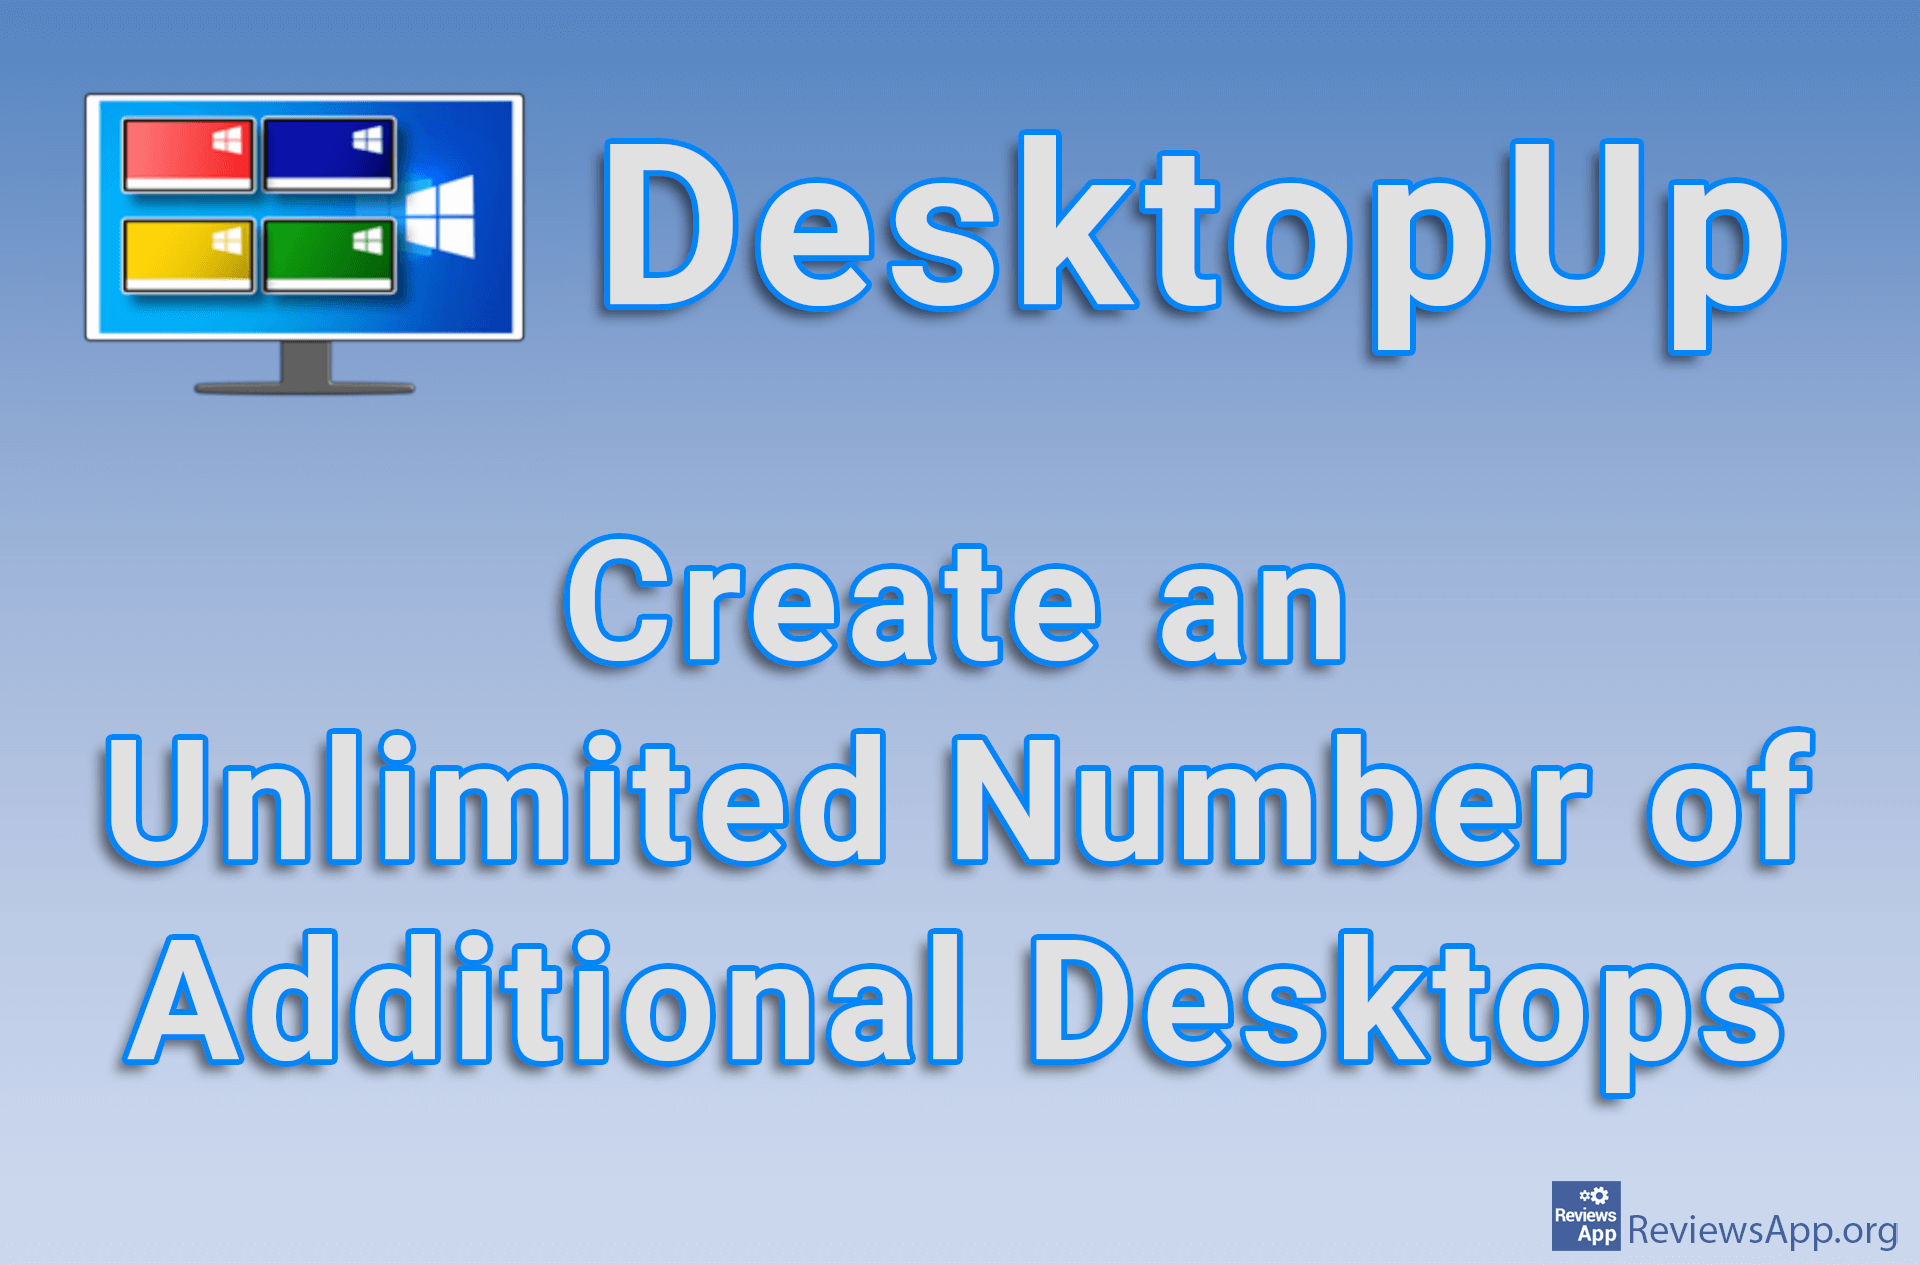 DesktopUp – Create an Unlimited Number of Additional Desktops